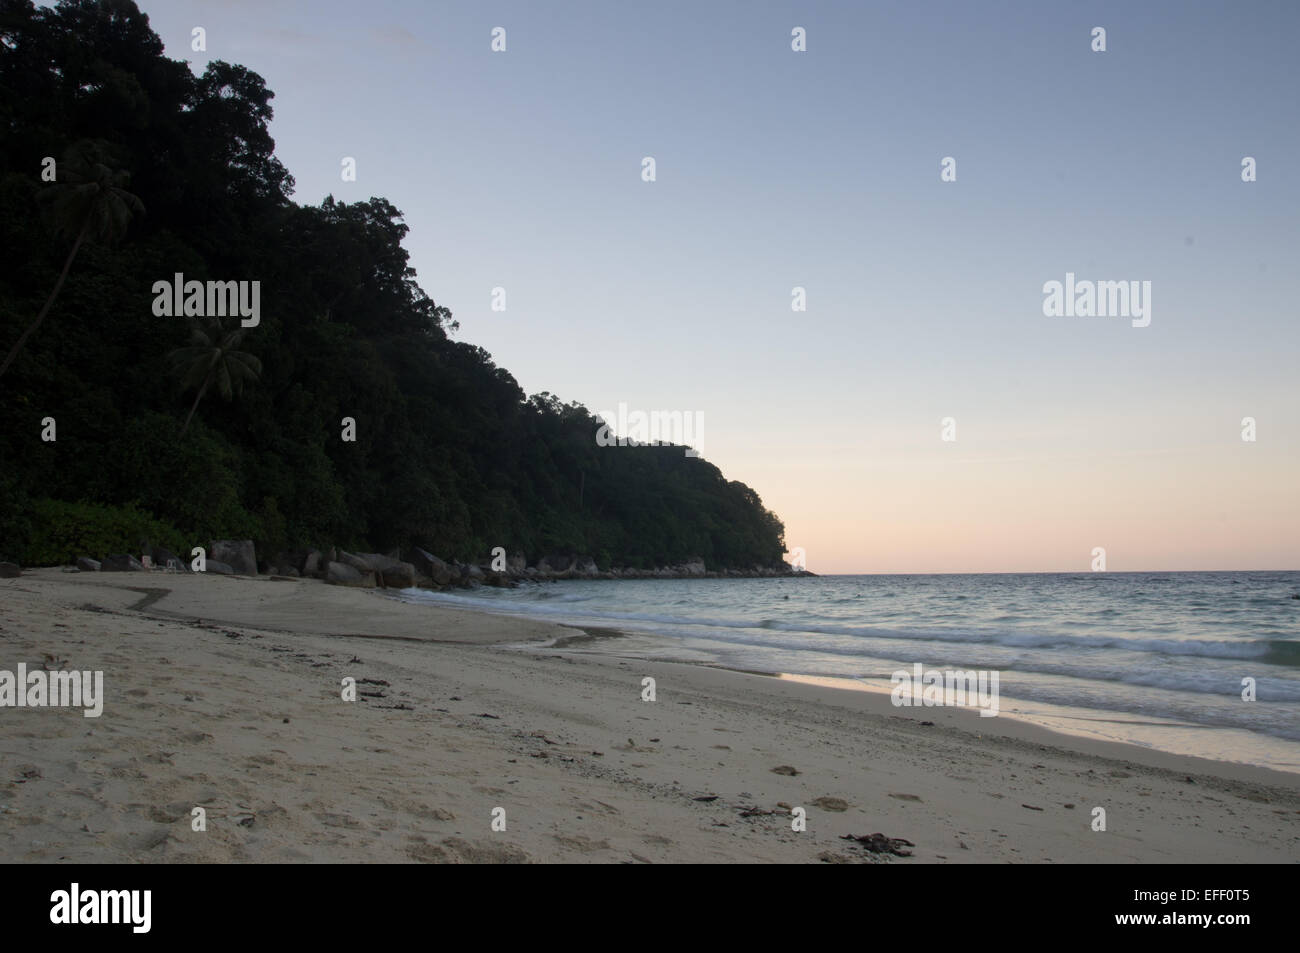 Teluk Dalam Beach, flora Bay, pulau perhentian, malaysia Stock Photo